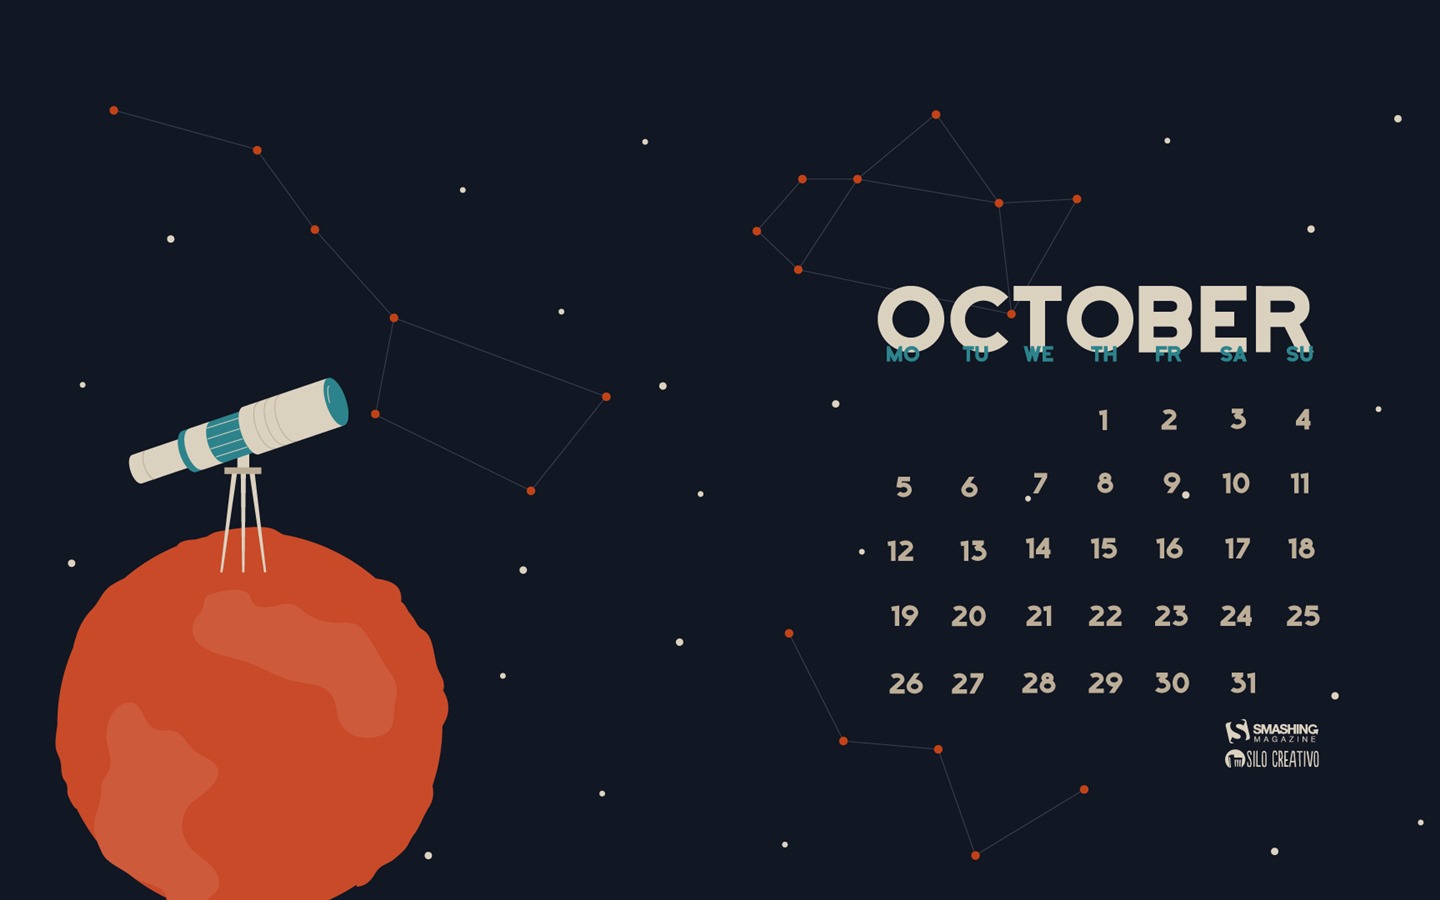 October 2015 calendar wallpaper (2) #9 - 1440x900